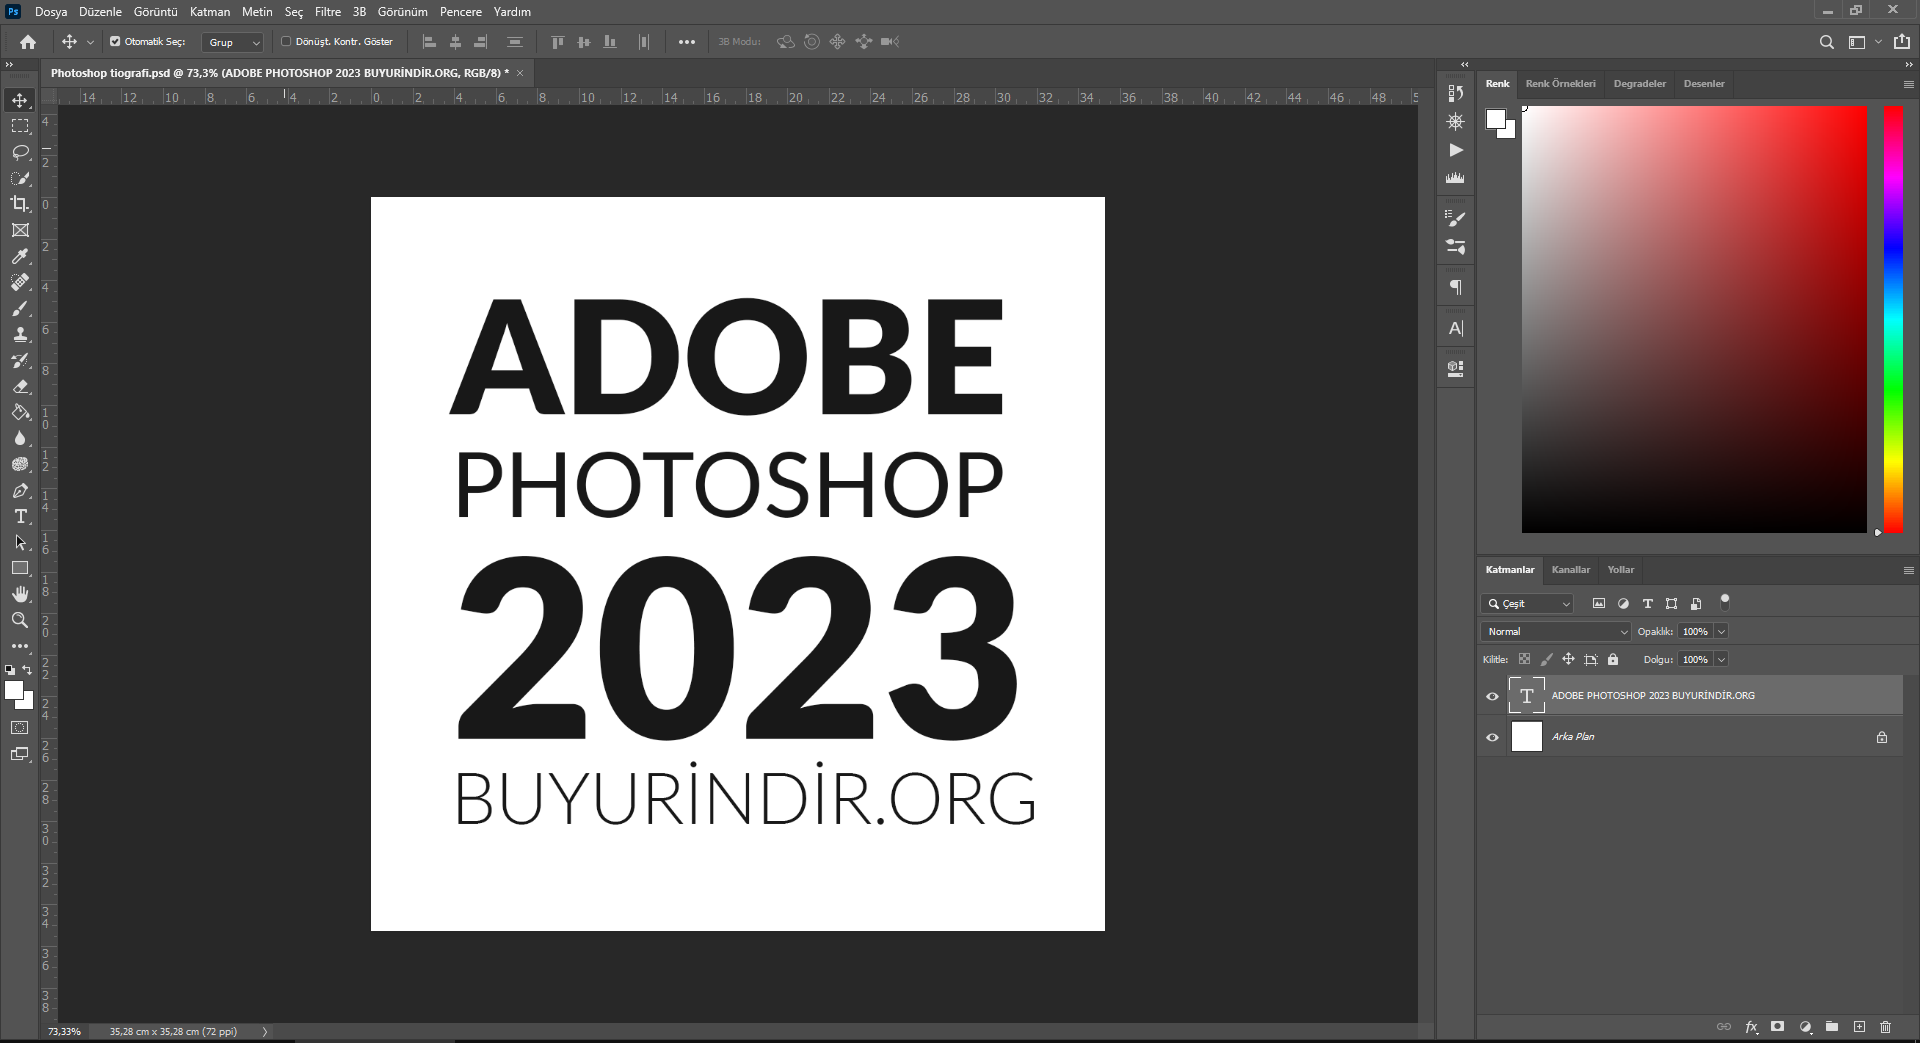 2023 Для фотошопа. Adobe Photoshop 2023. Интерфейс фотошопа 2023. Требование фотошопа 2023. Версия фотошопа 2023